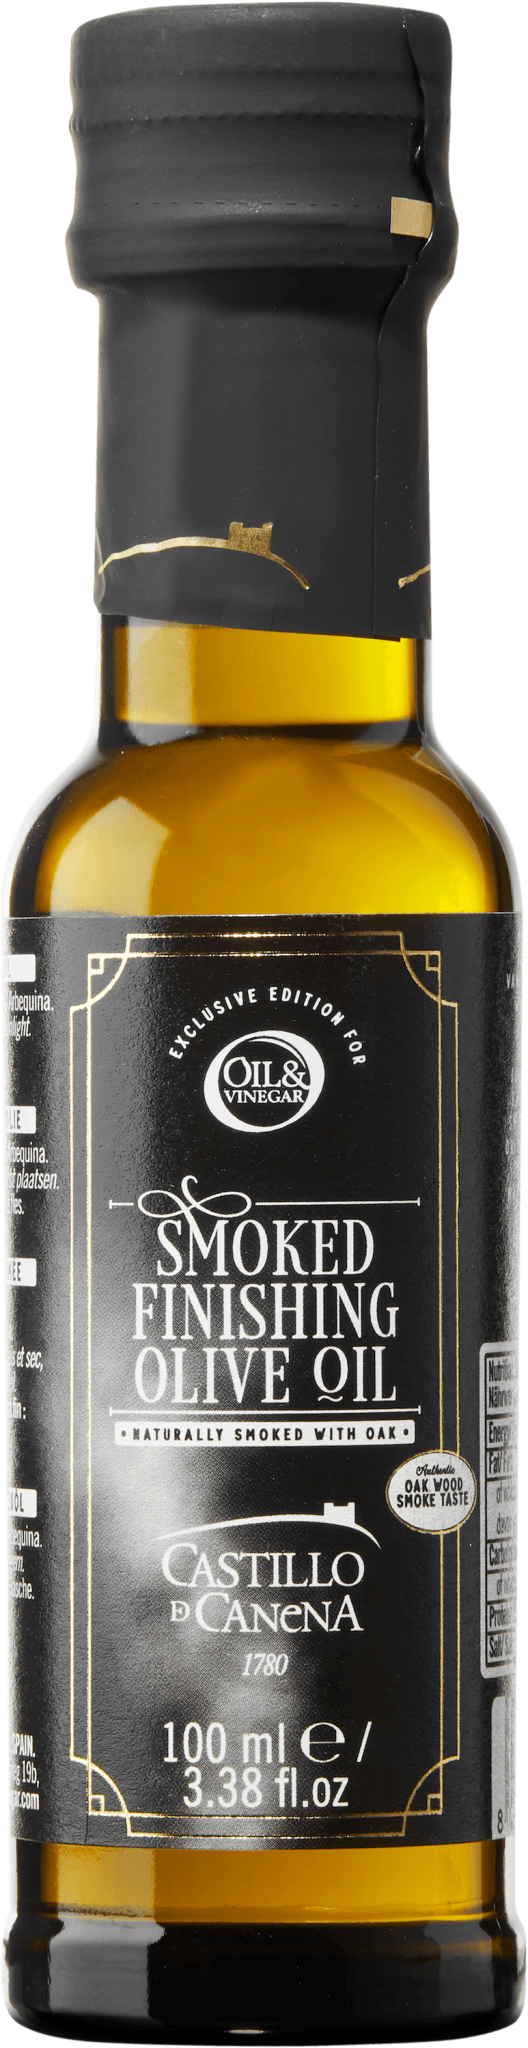 Smoked finishing olive oil 100 ml - oilvinegar.ch